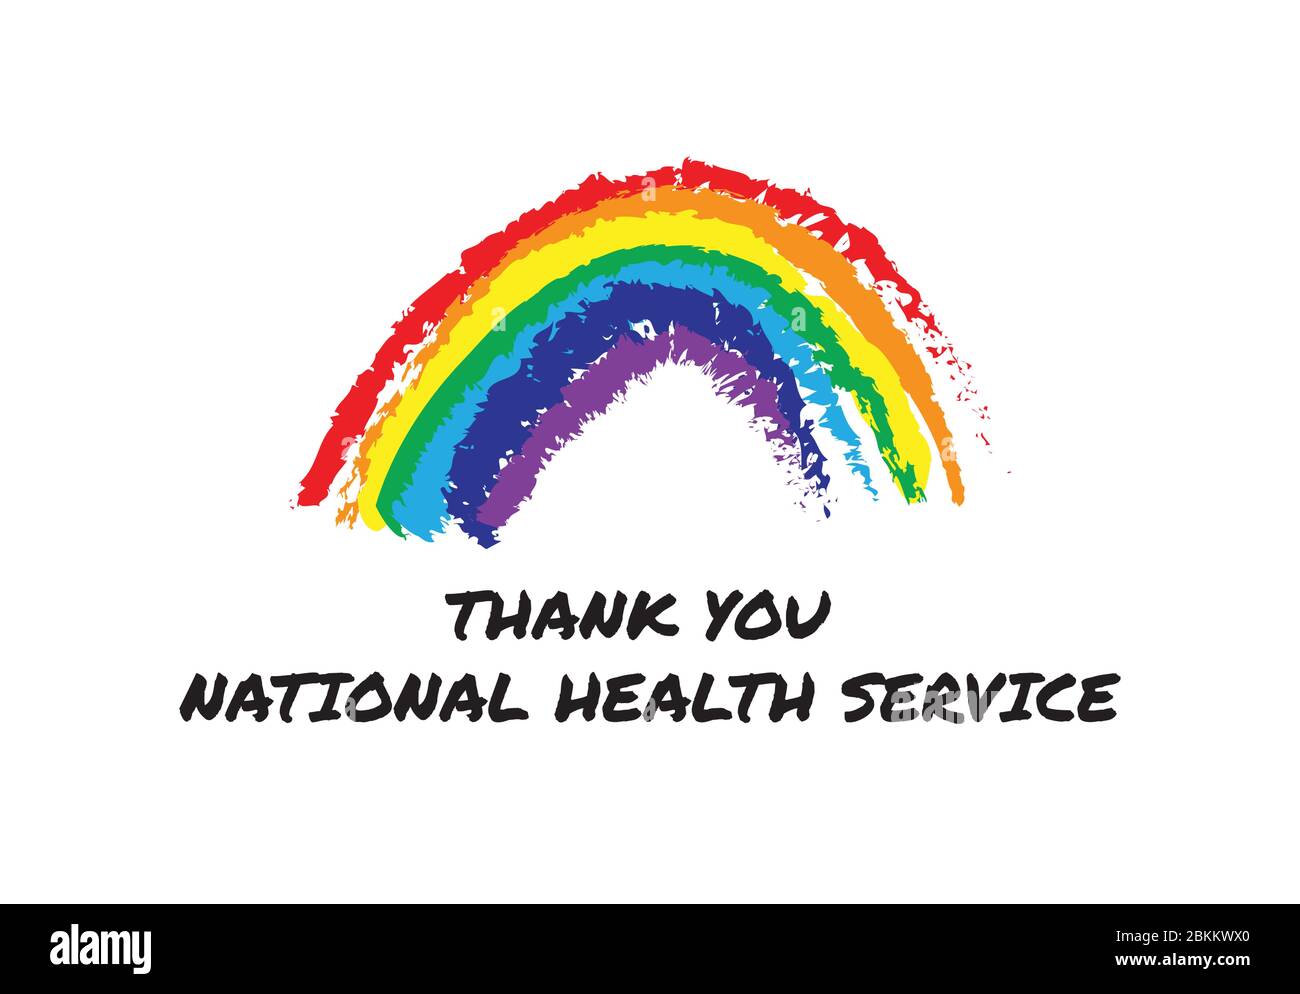 Merci NHS Rainbow Vector Illustration de Vecteur